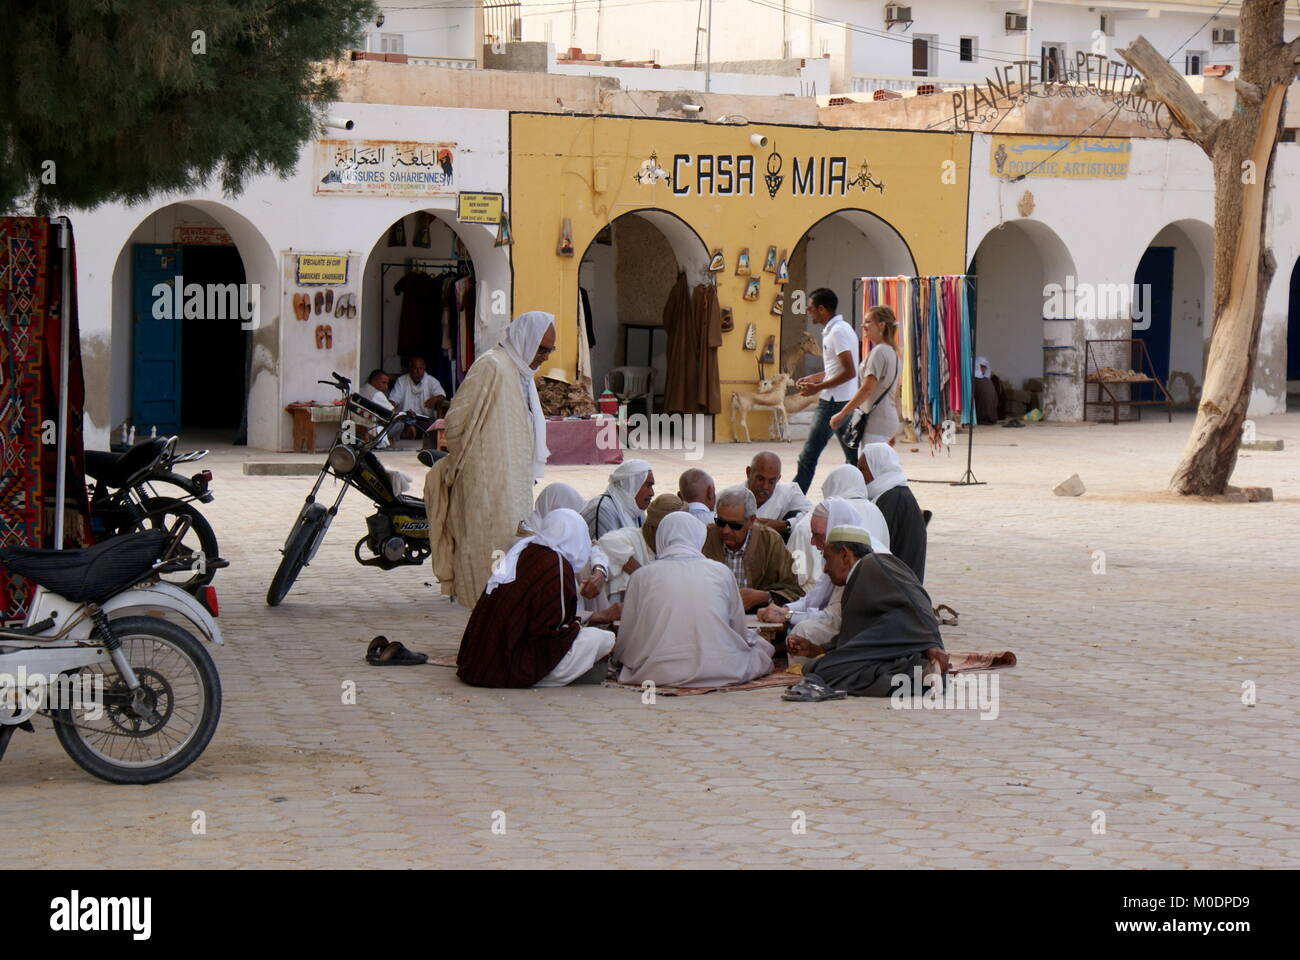 Group of Tunisian men sitting on the ground in Douz centre square, Douz, Kebili district, Tunisia Stock Photo